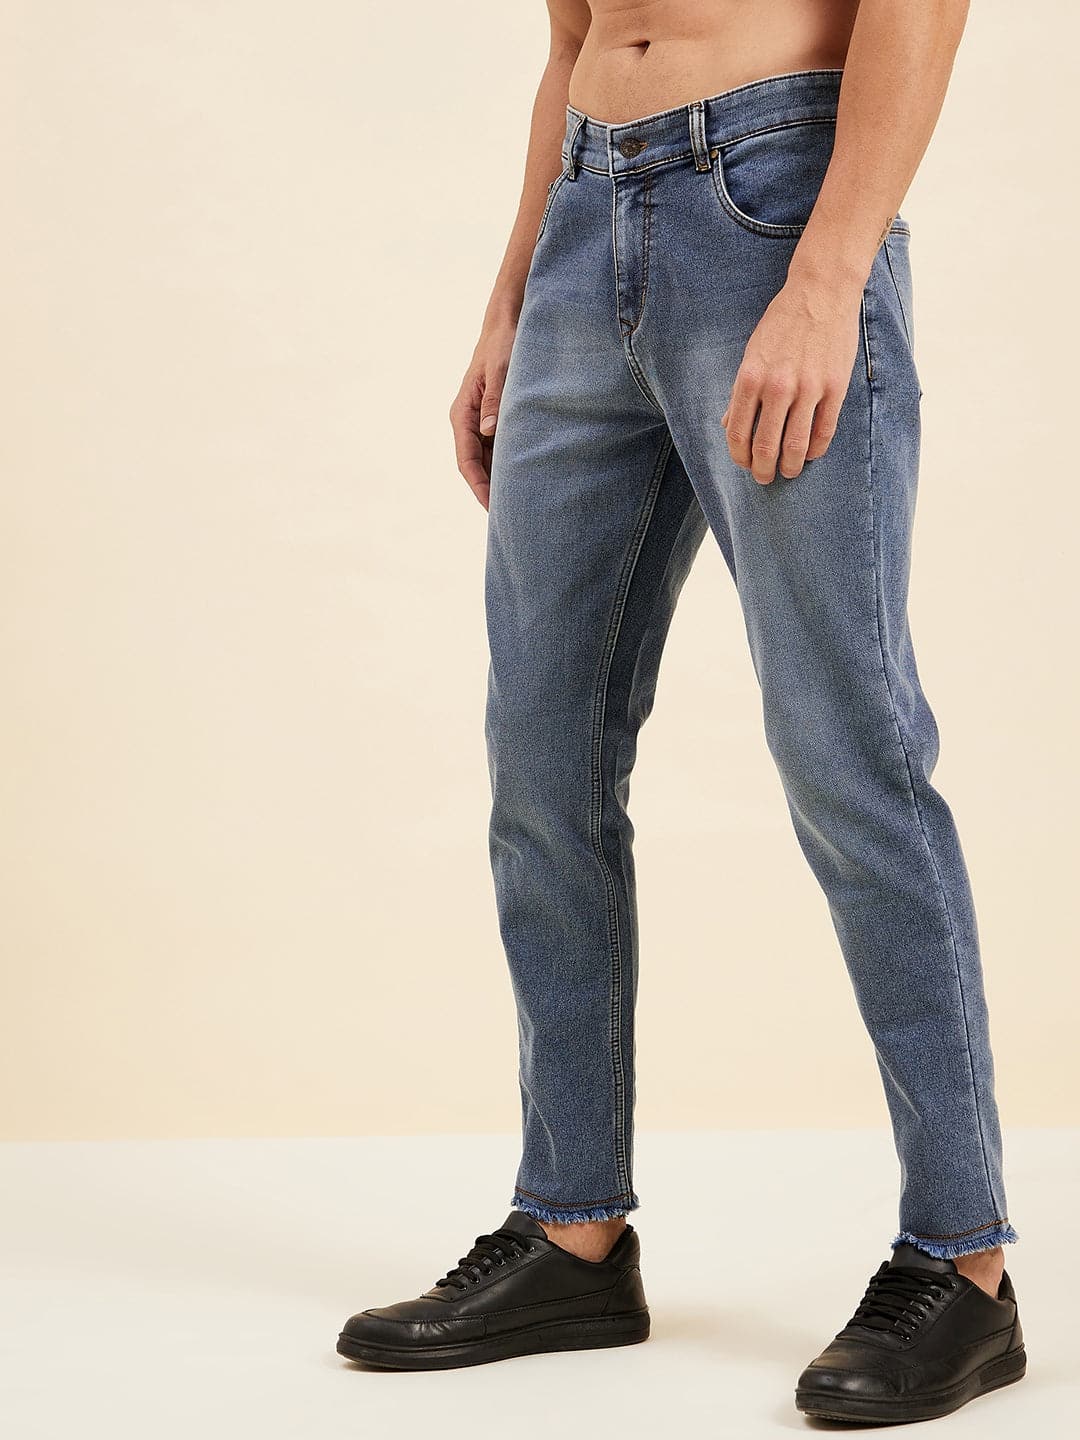 Men's Navy Slim Fit Jeans - LYUSH-MASCLN